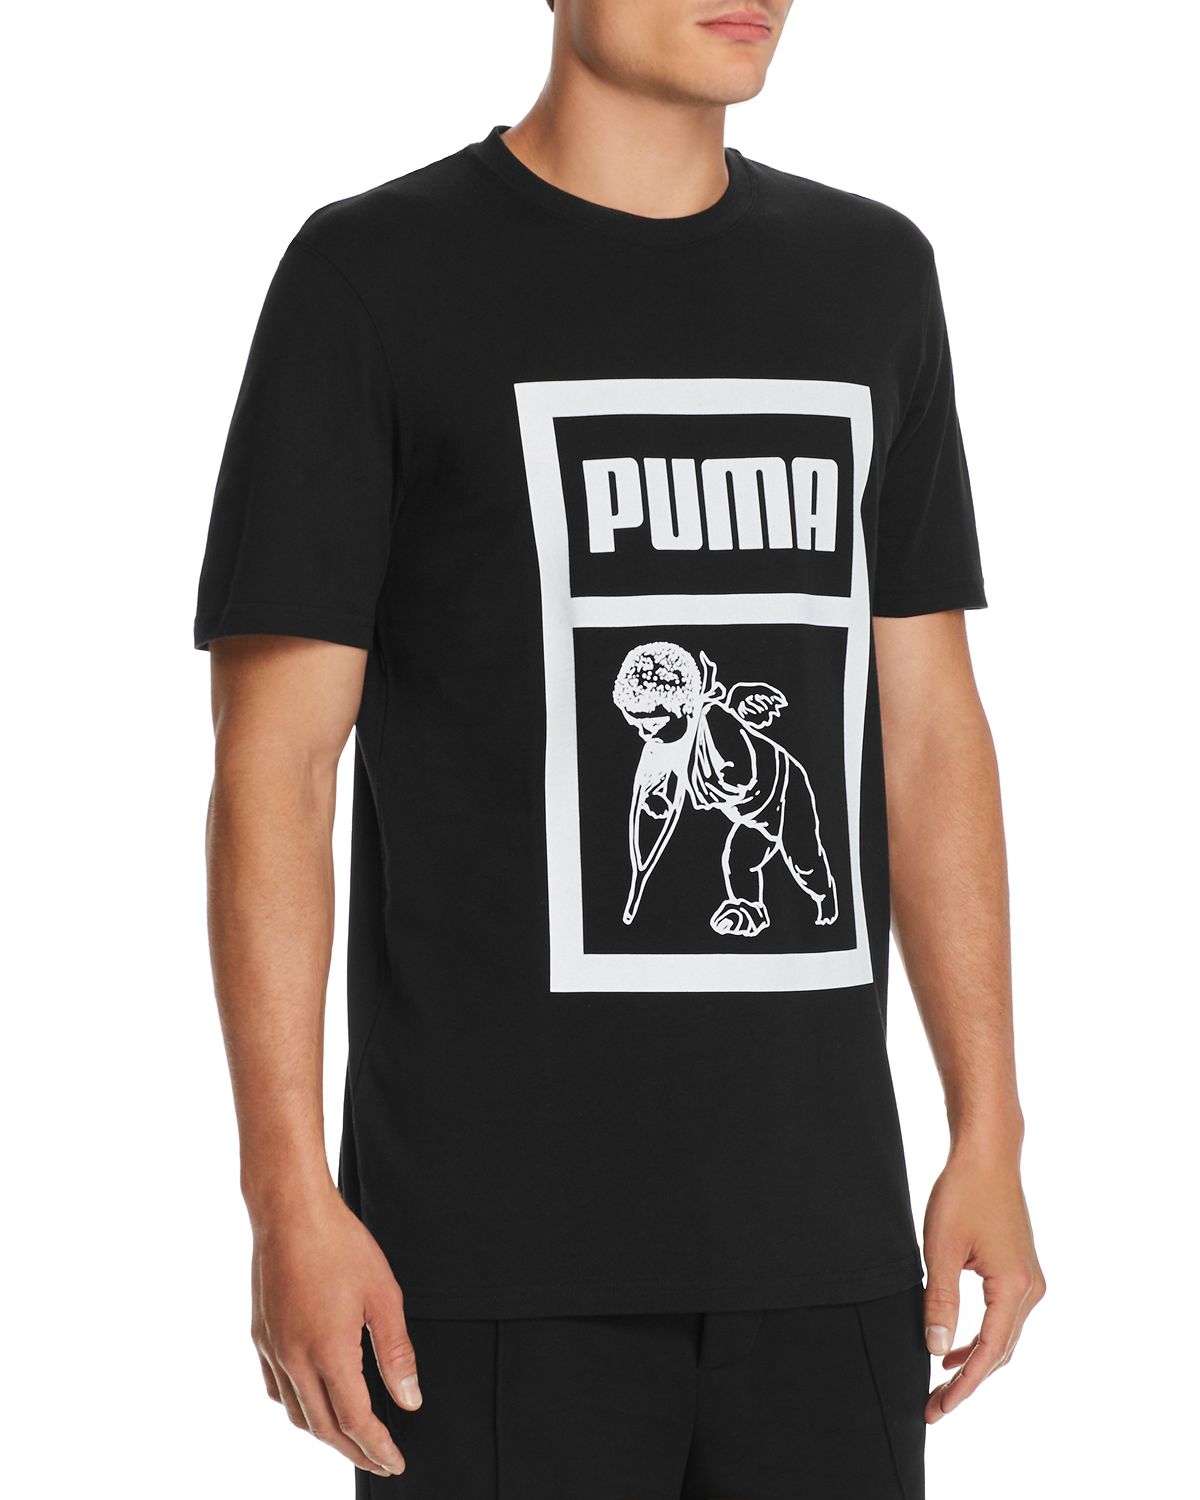 Puma X Prps Graphic Tee Black